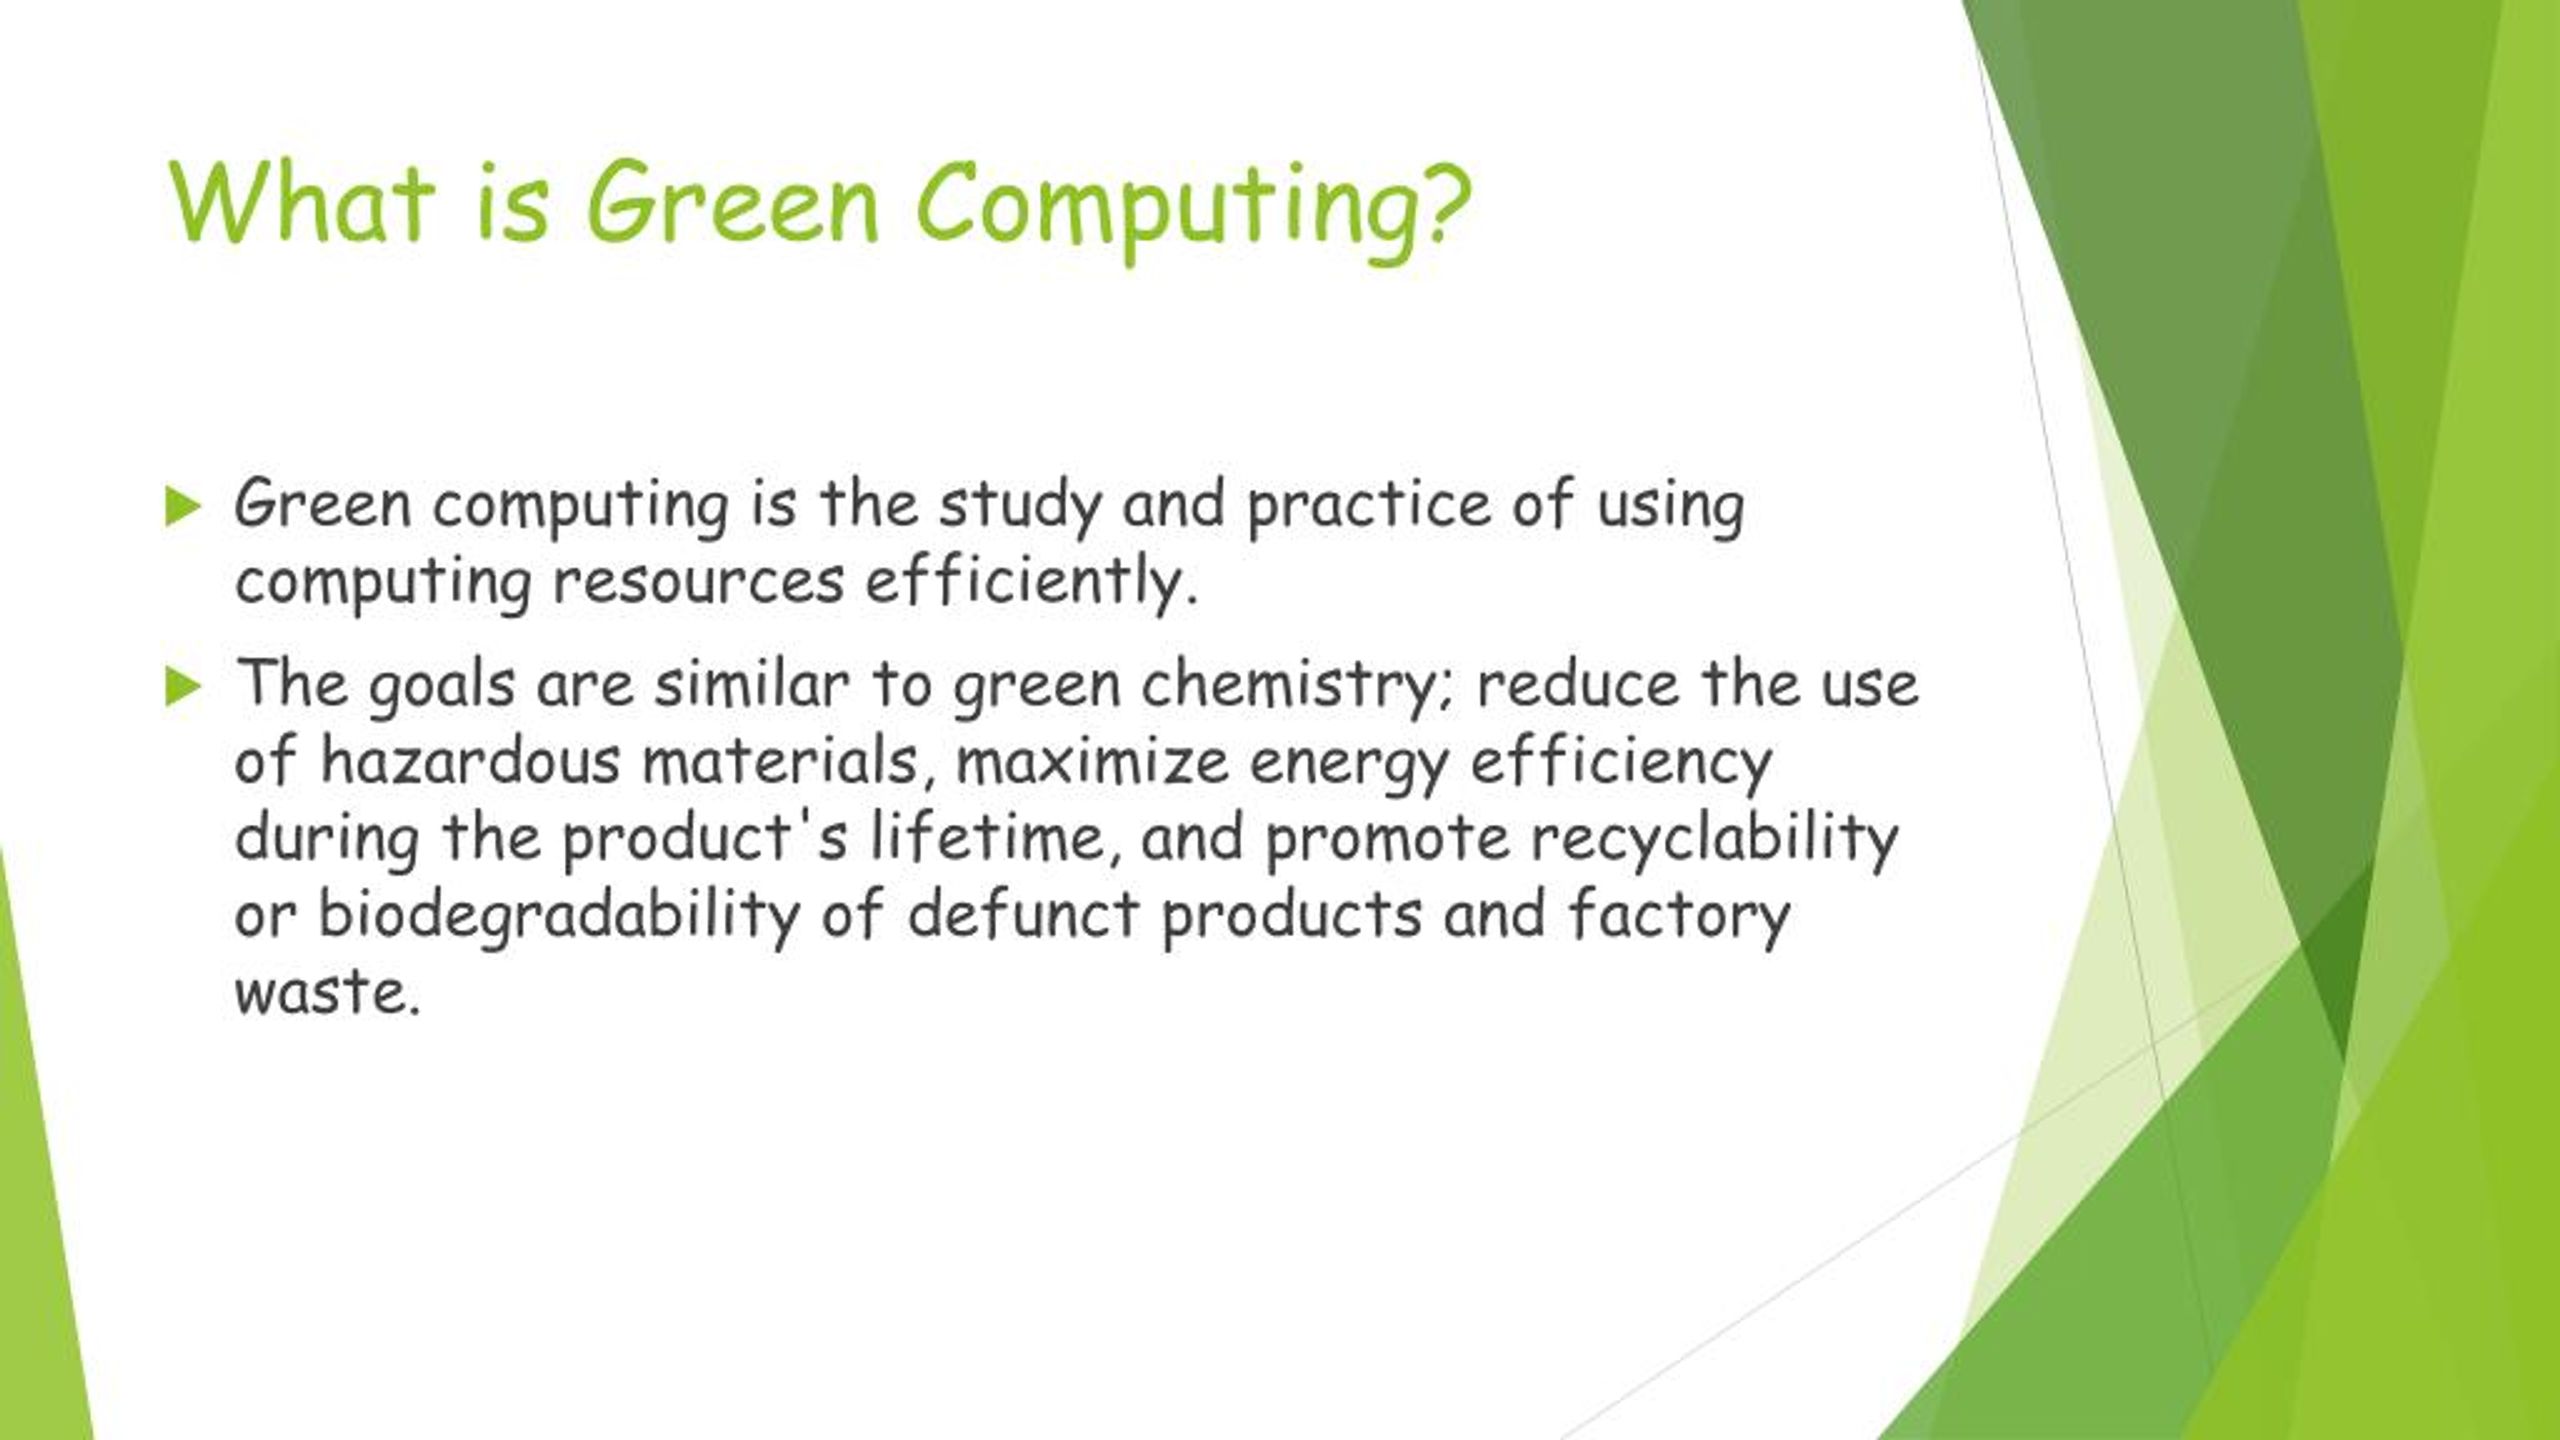 powerpoint presentation on green computing